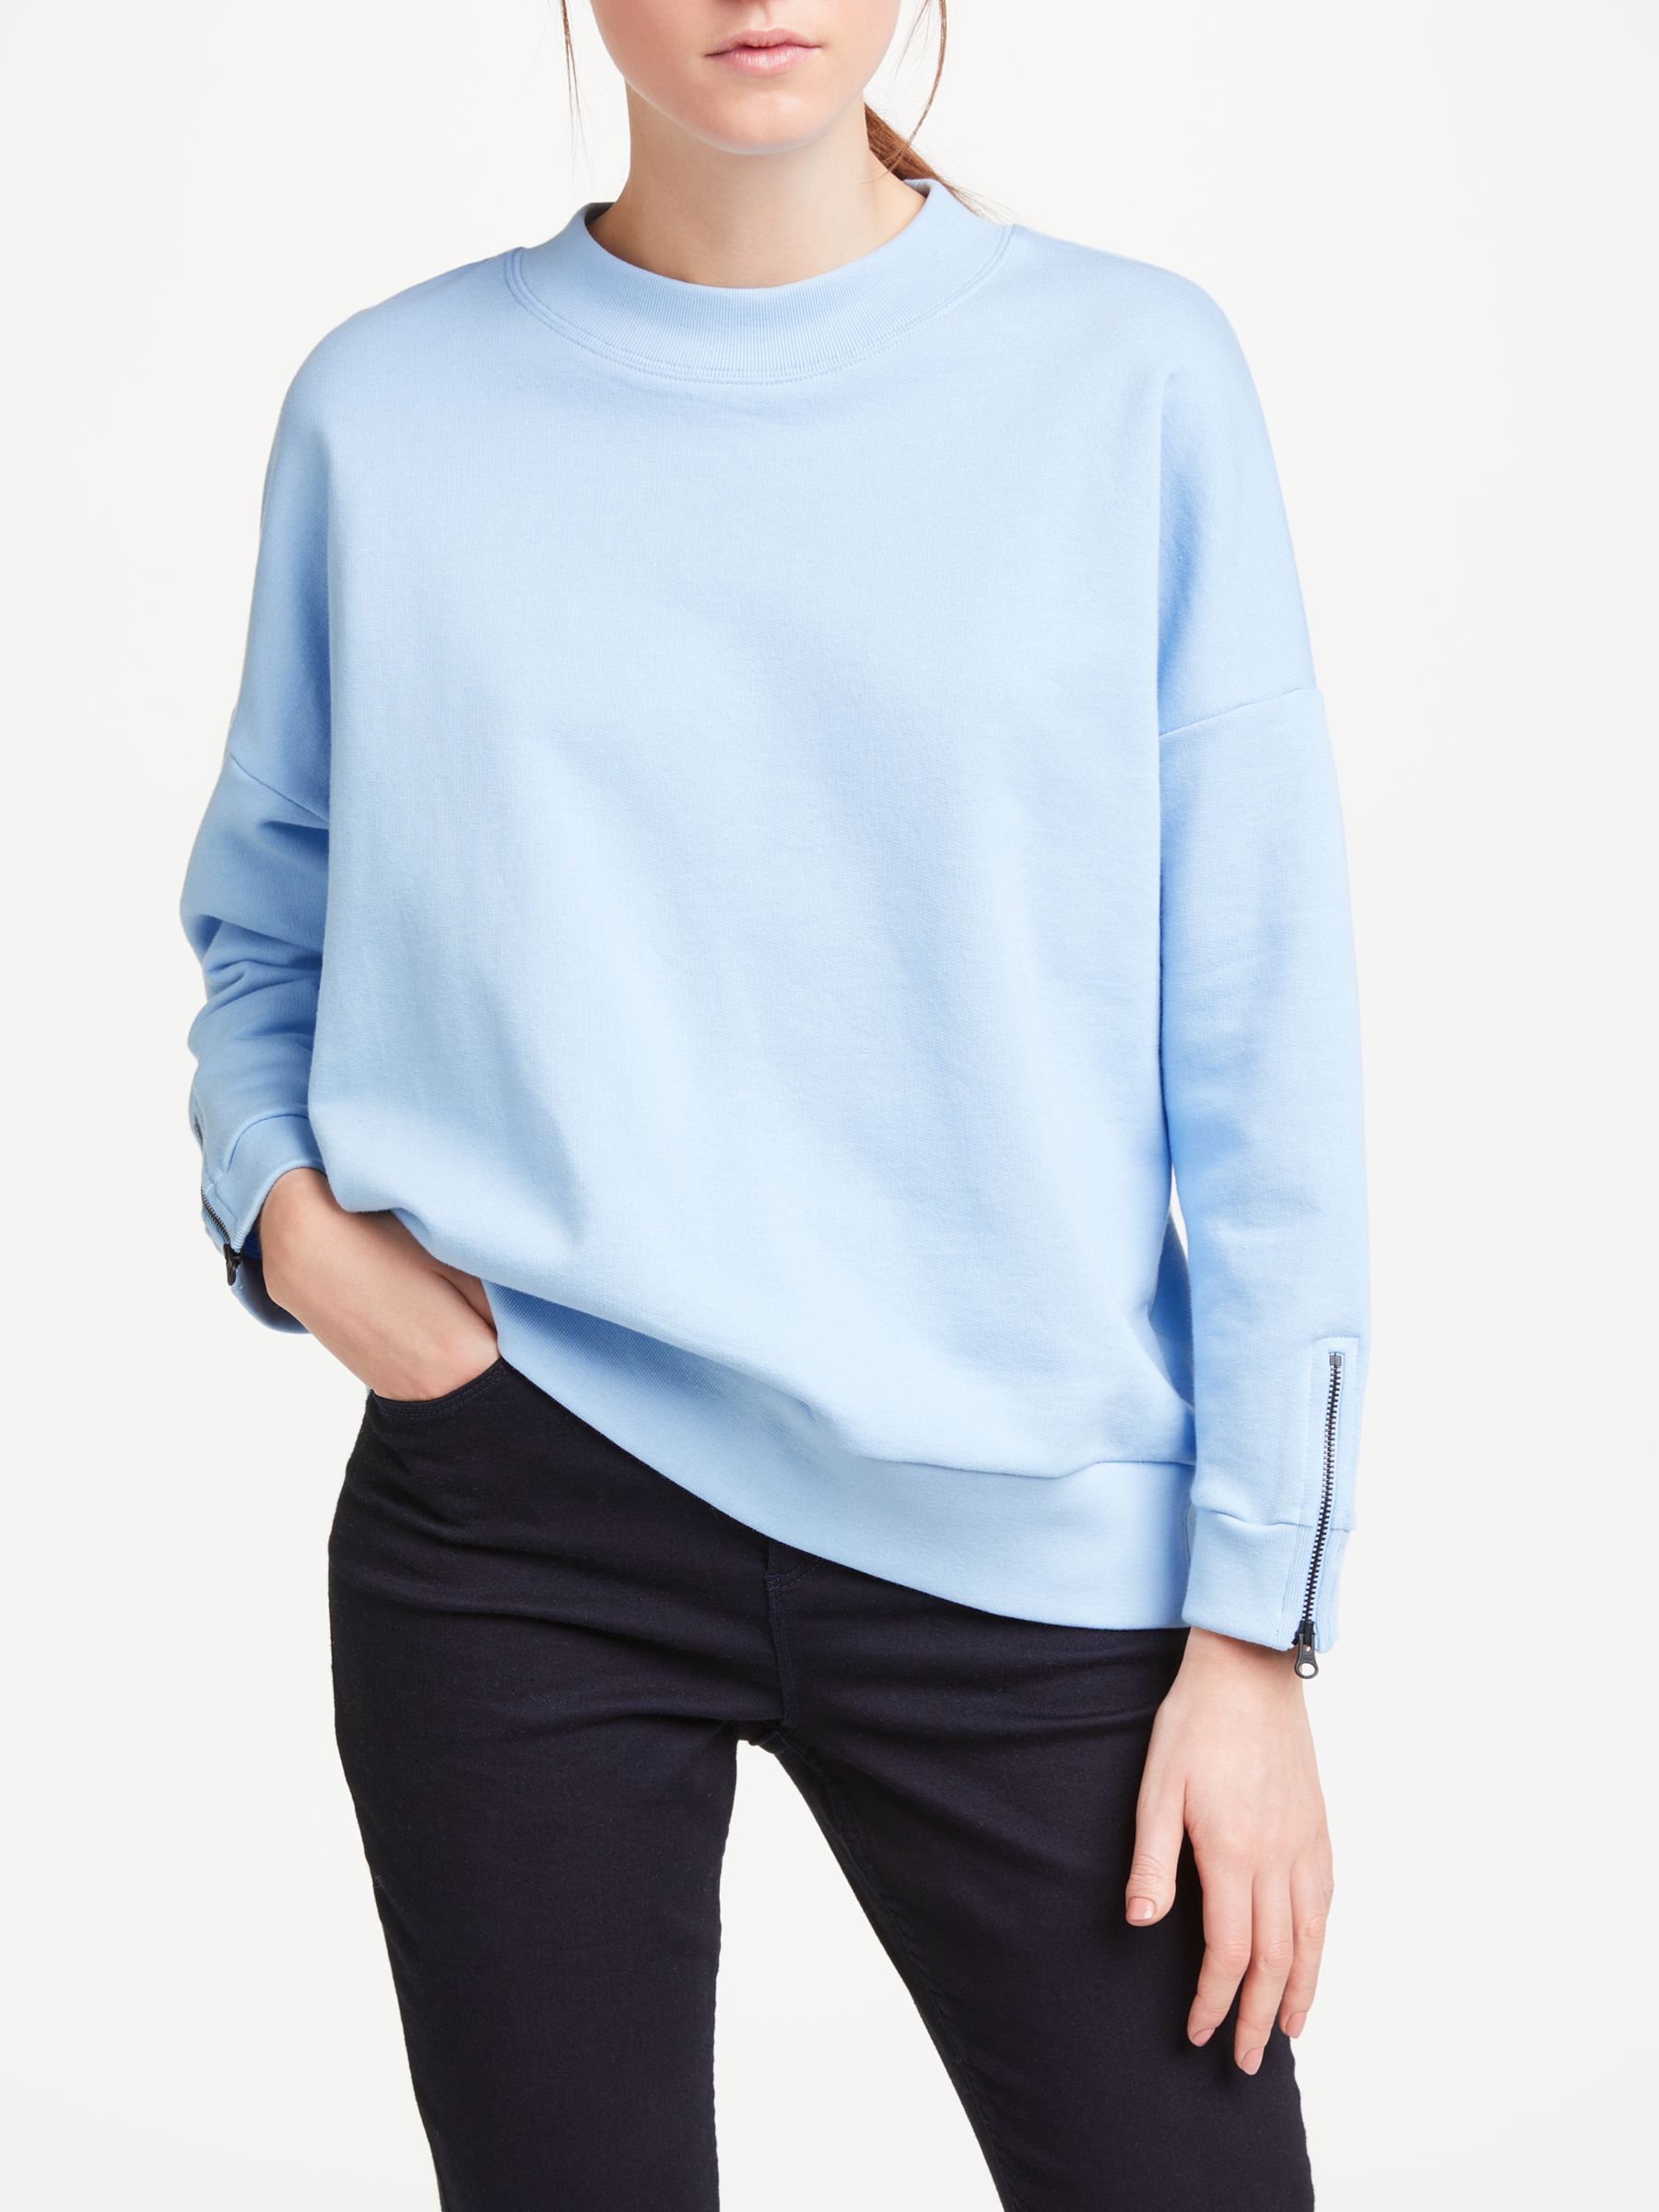 Kin Zip Detail Sweatshirt, Blue, M